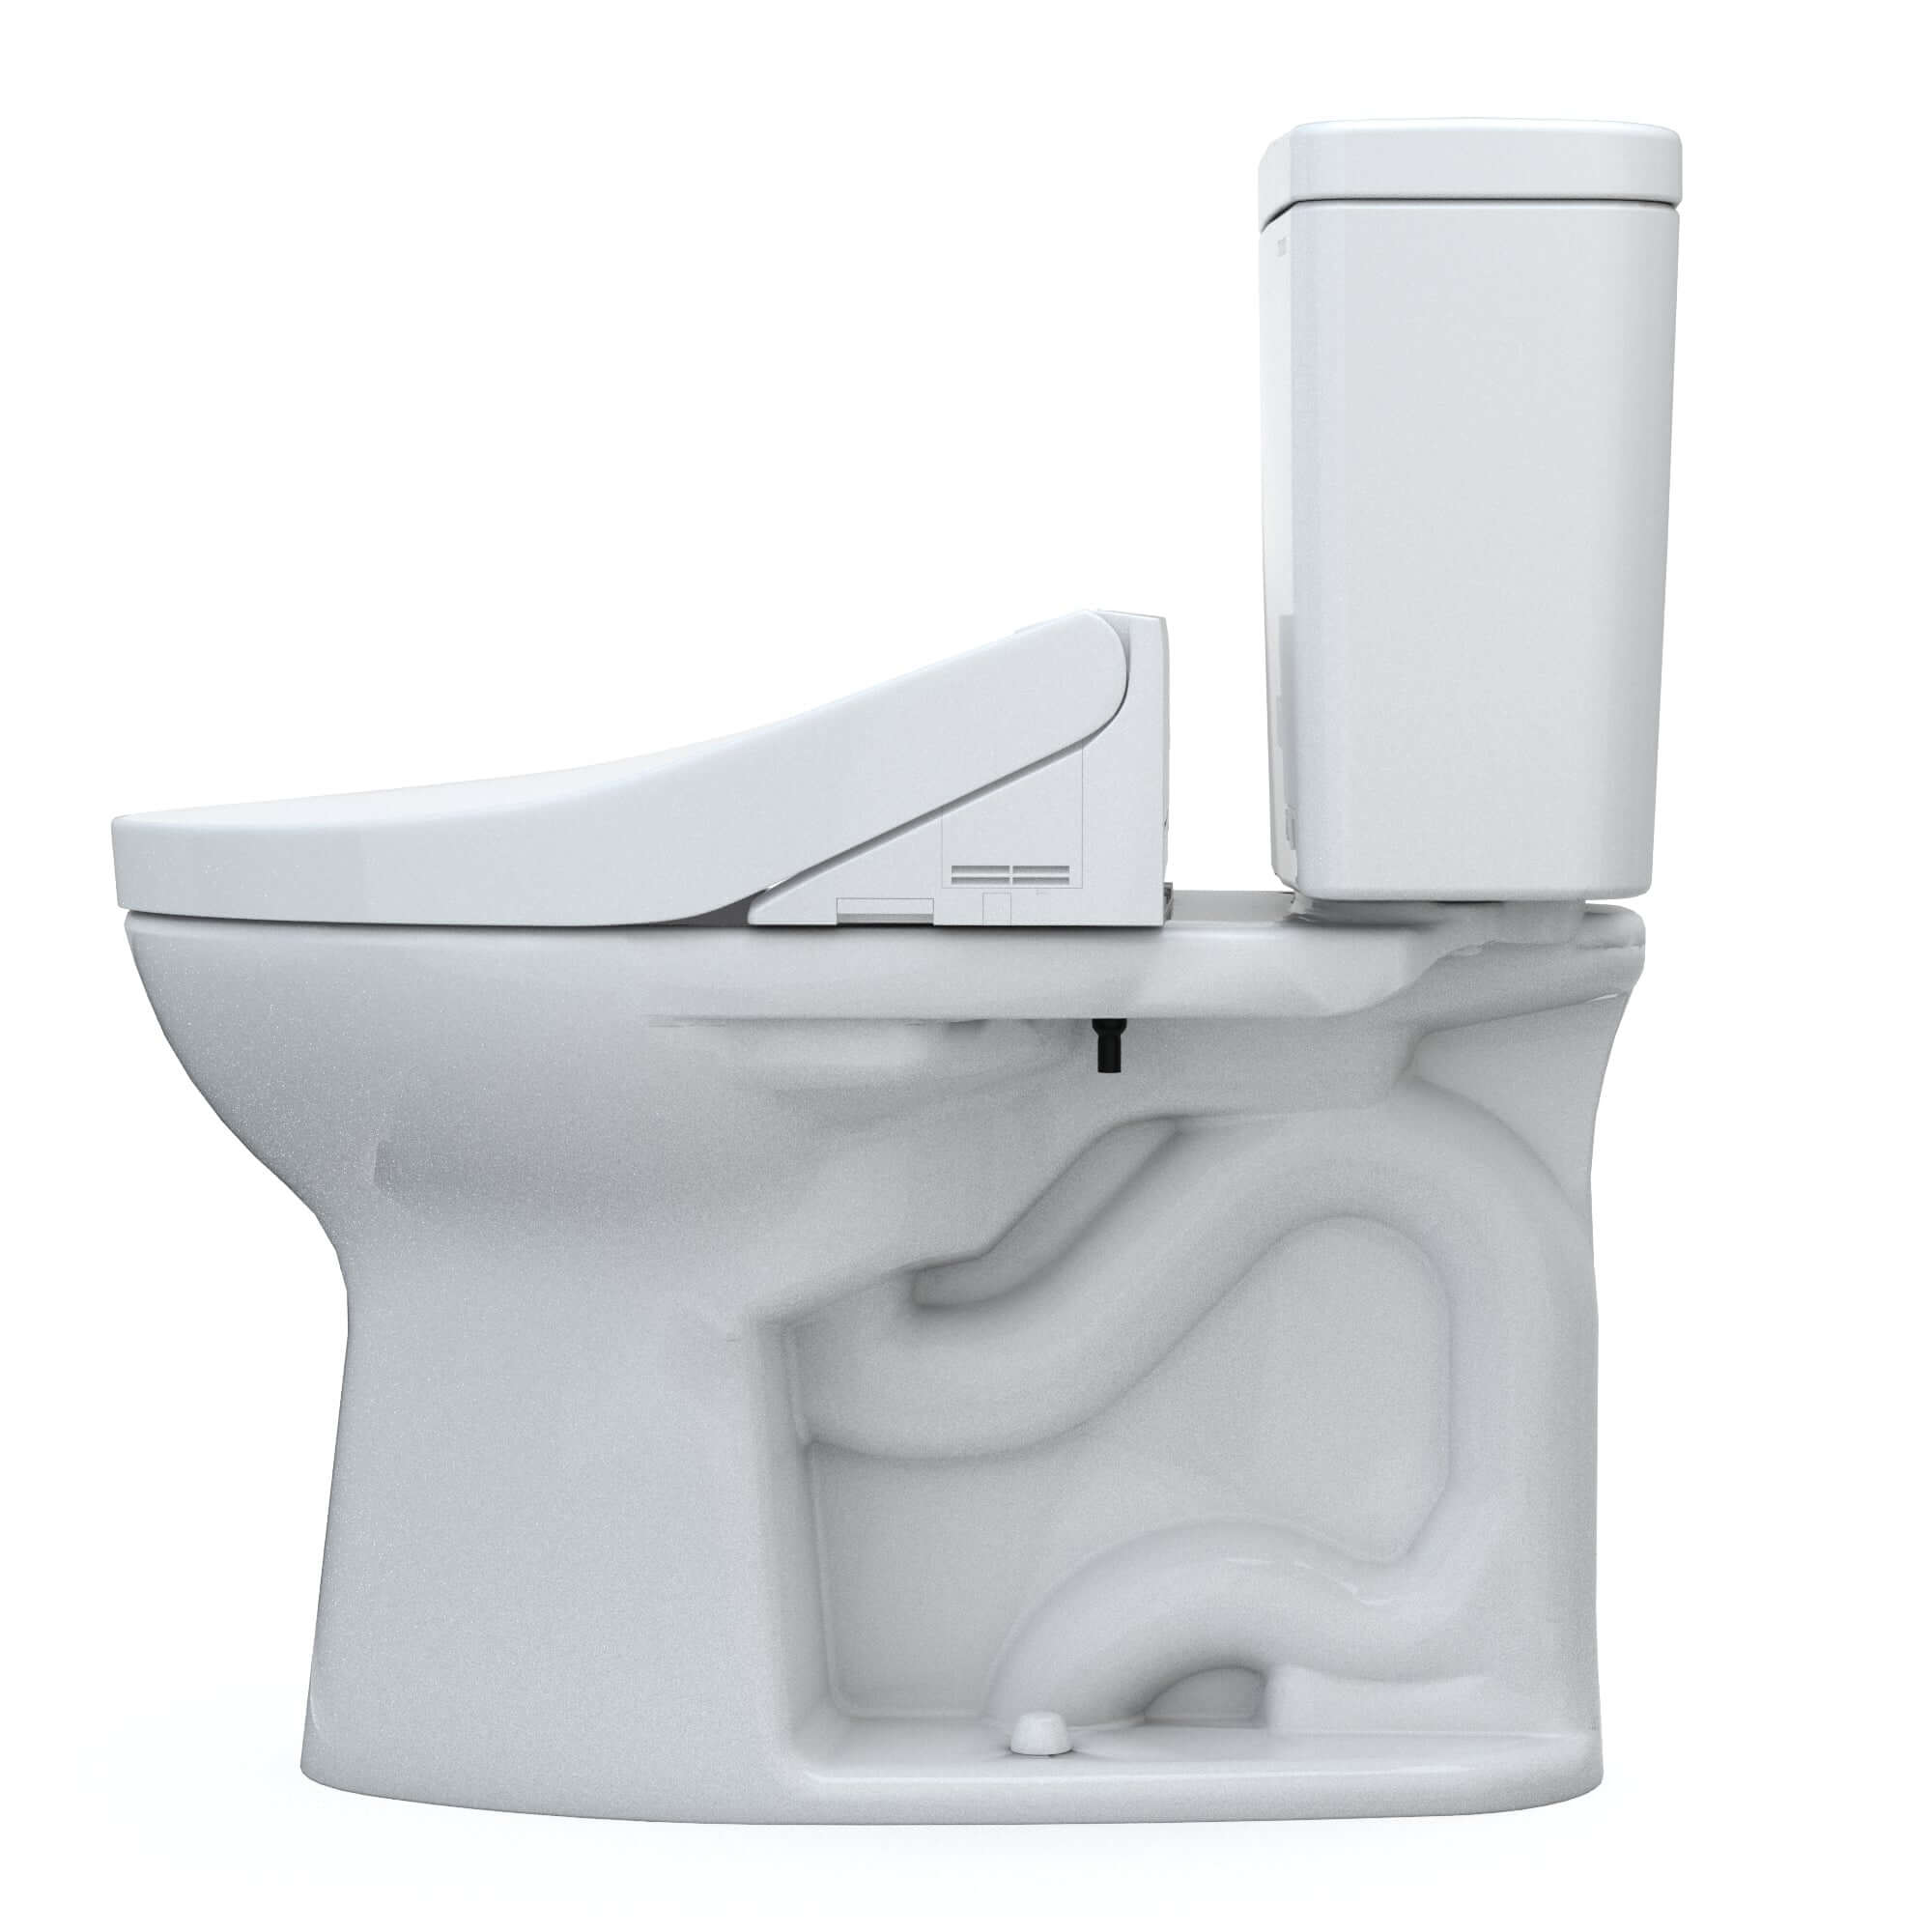 TOTO Drake WASHLET+ Two-Piece Elongated 1.28 GPF Universal Height Toilet with C2 Bidet Seat, Cotton White - MW7763074CEFG#01